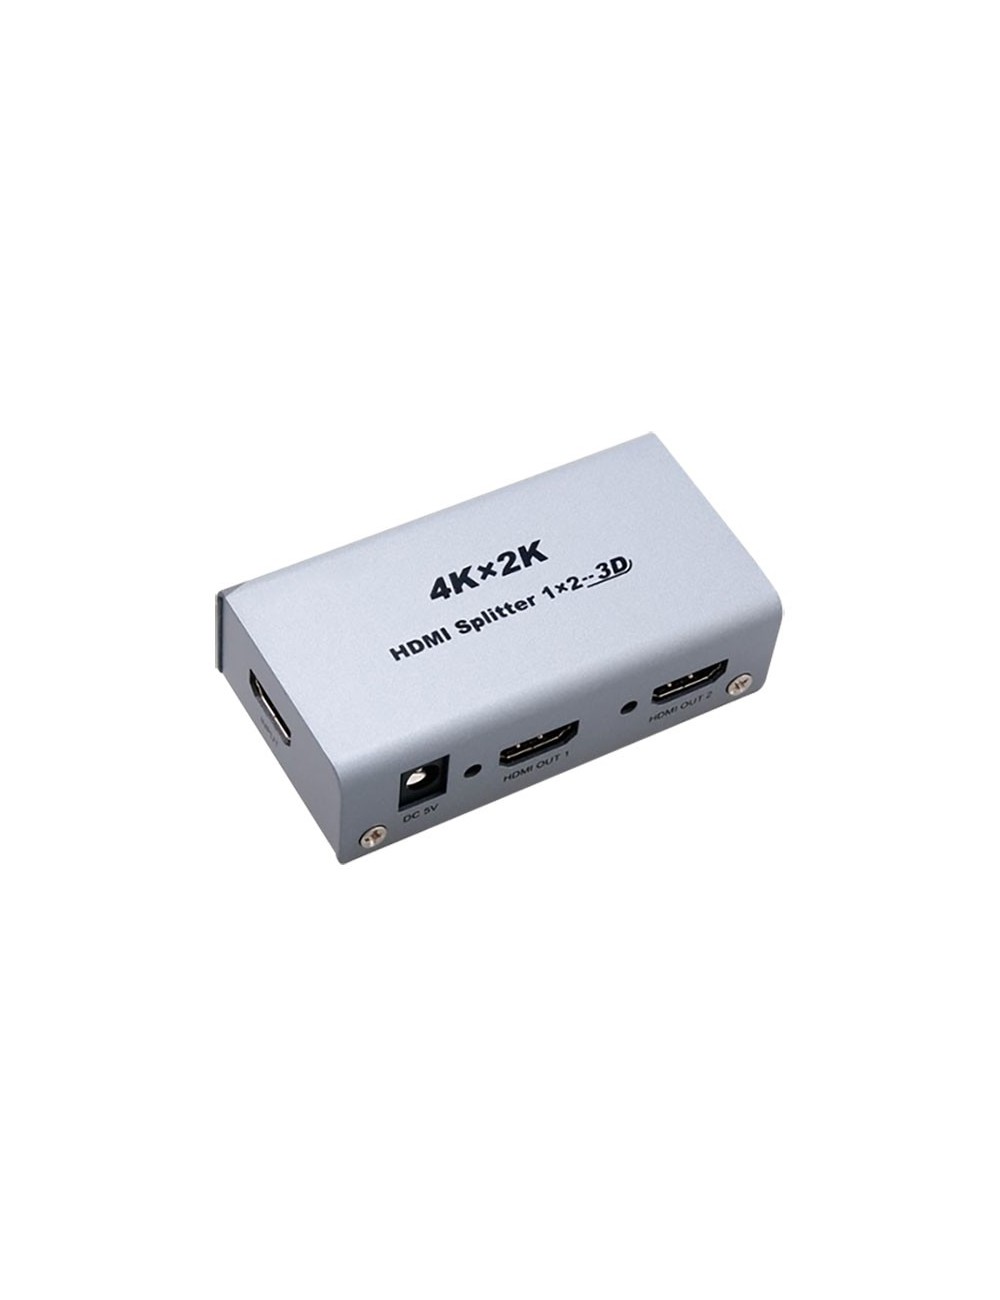 HDMI signal multiplier - 2 HDMI outputs